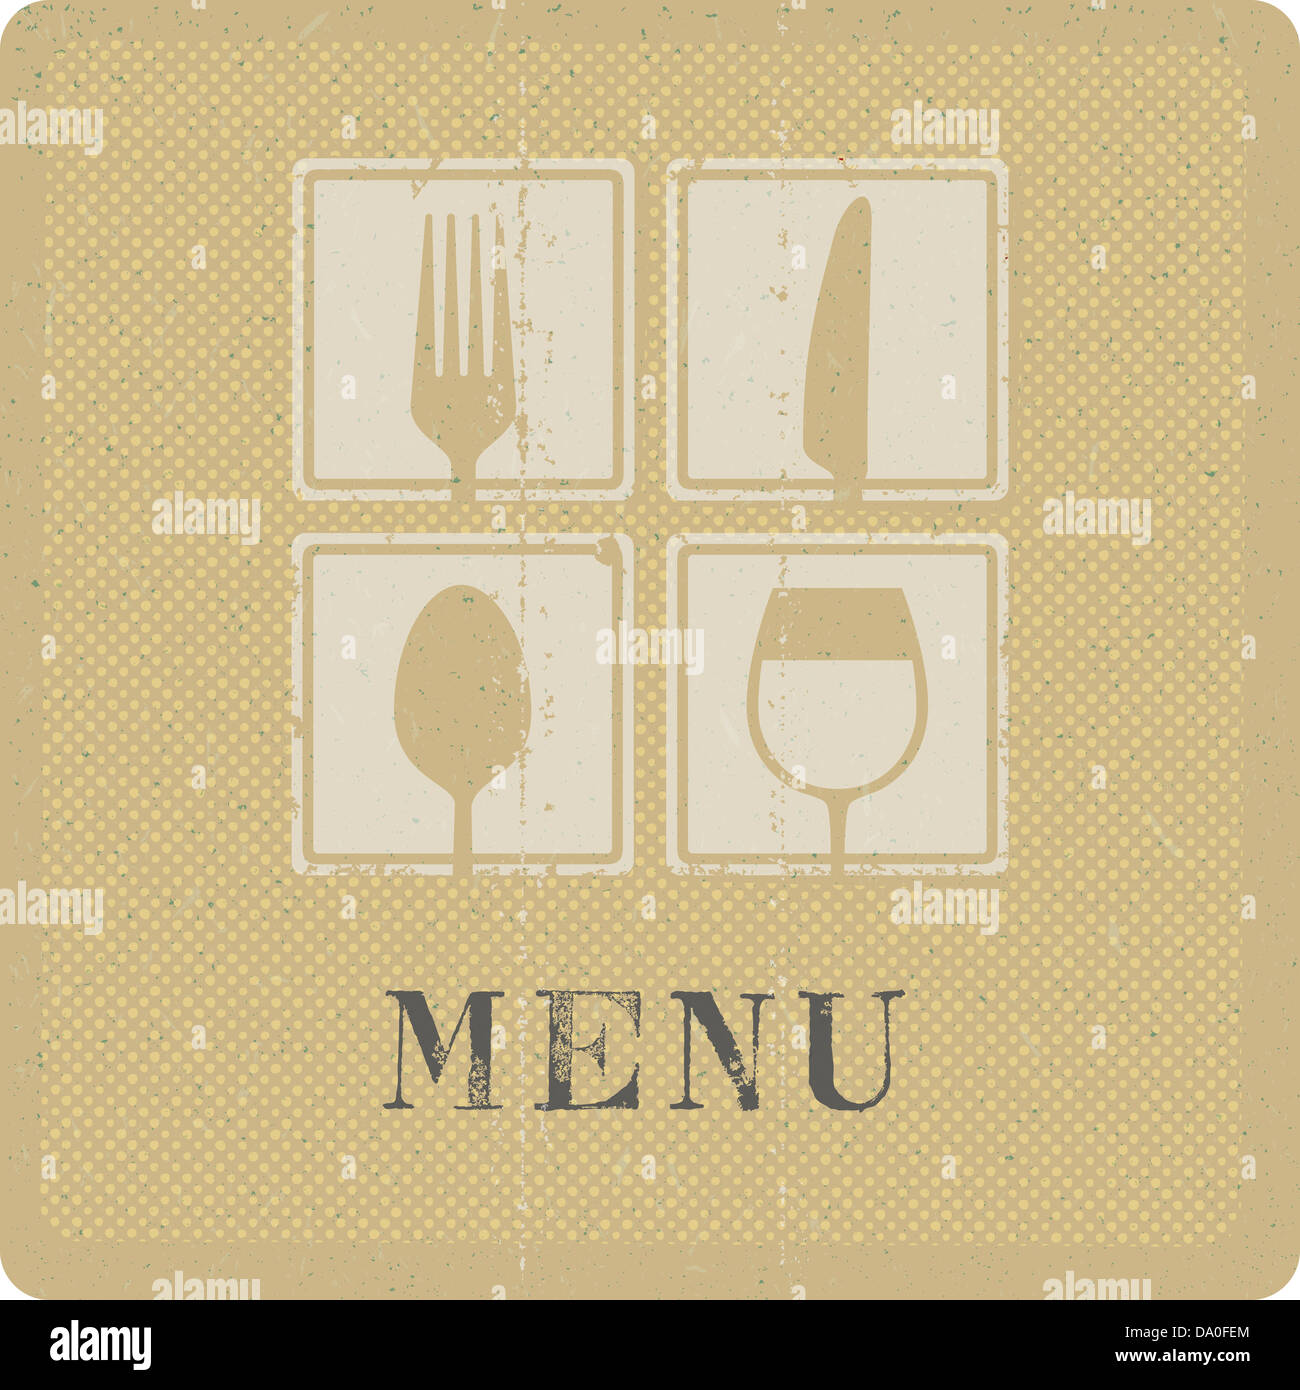 silkscreen print of menu cover Stock Photo